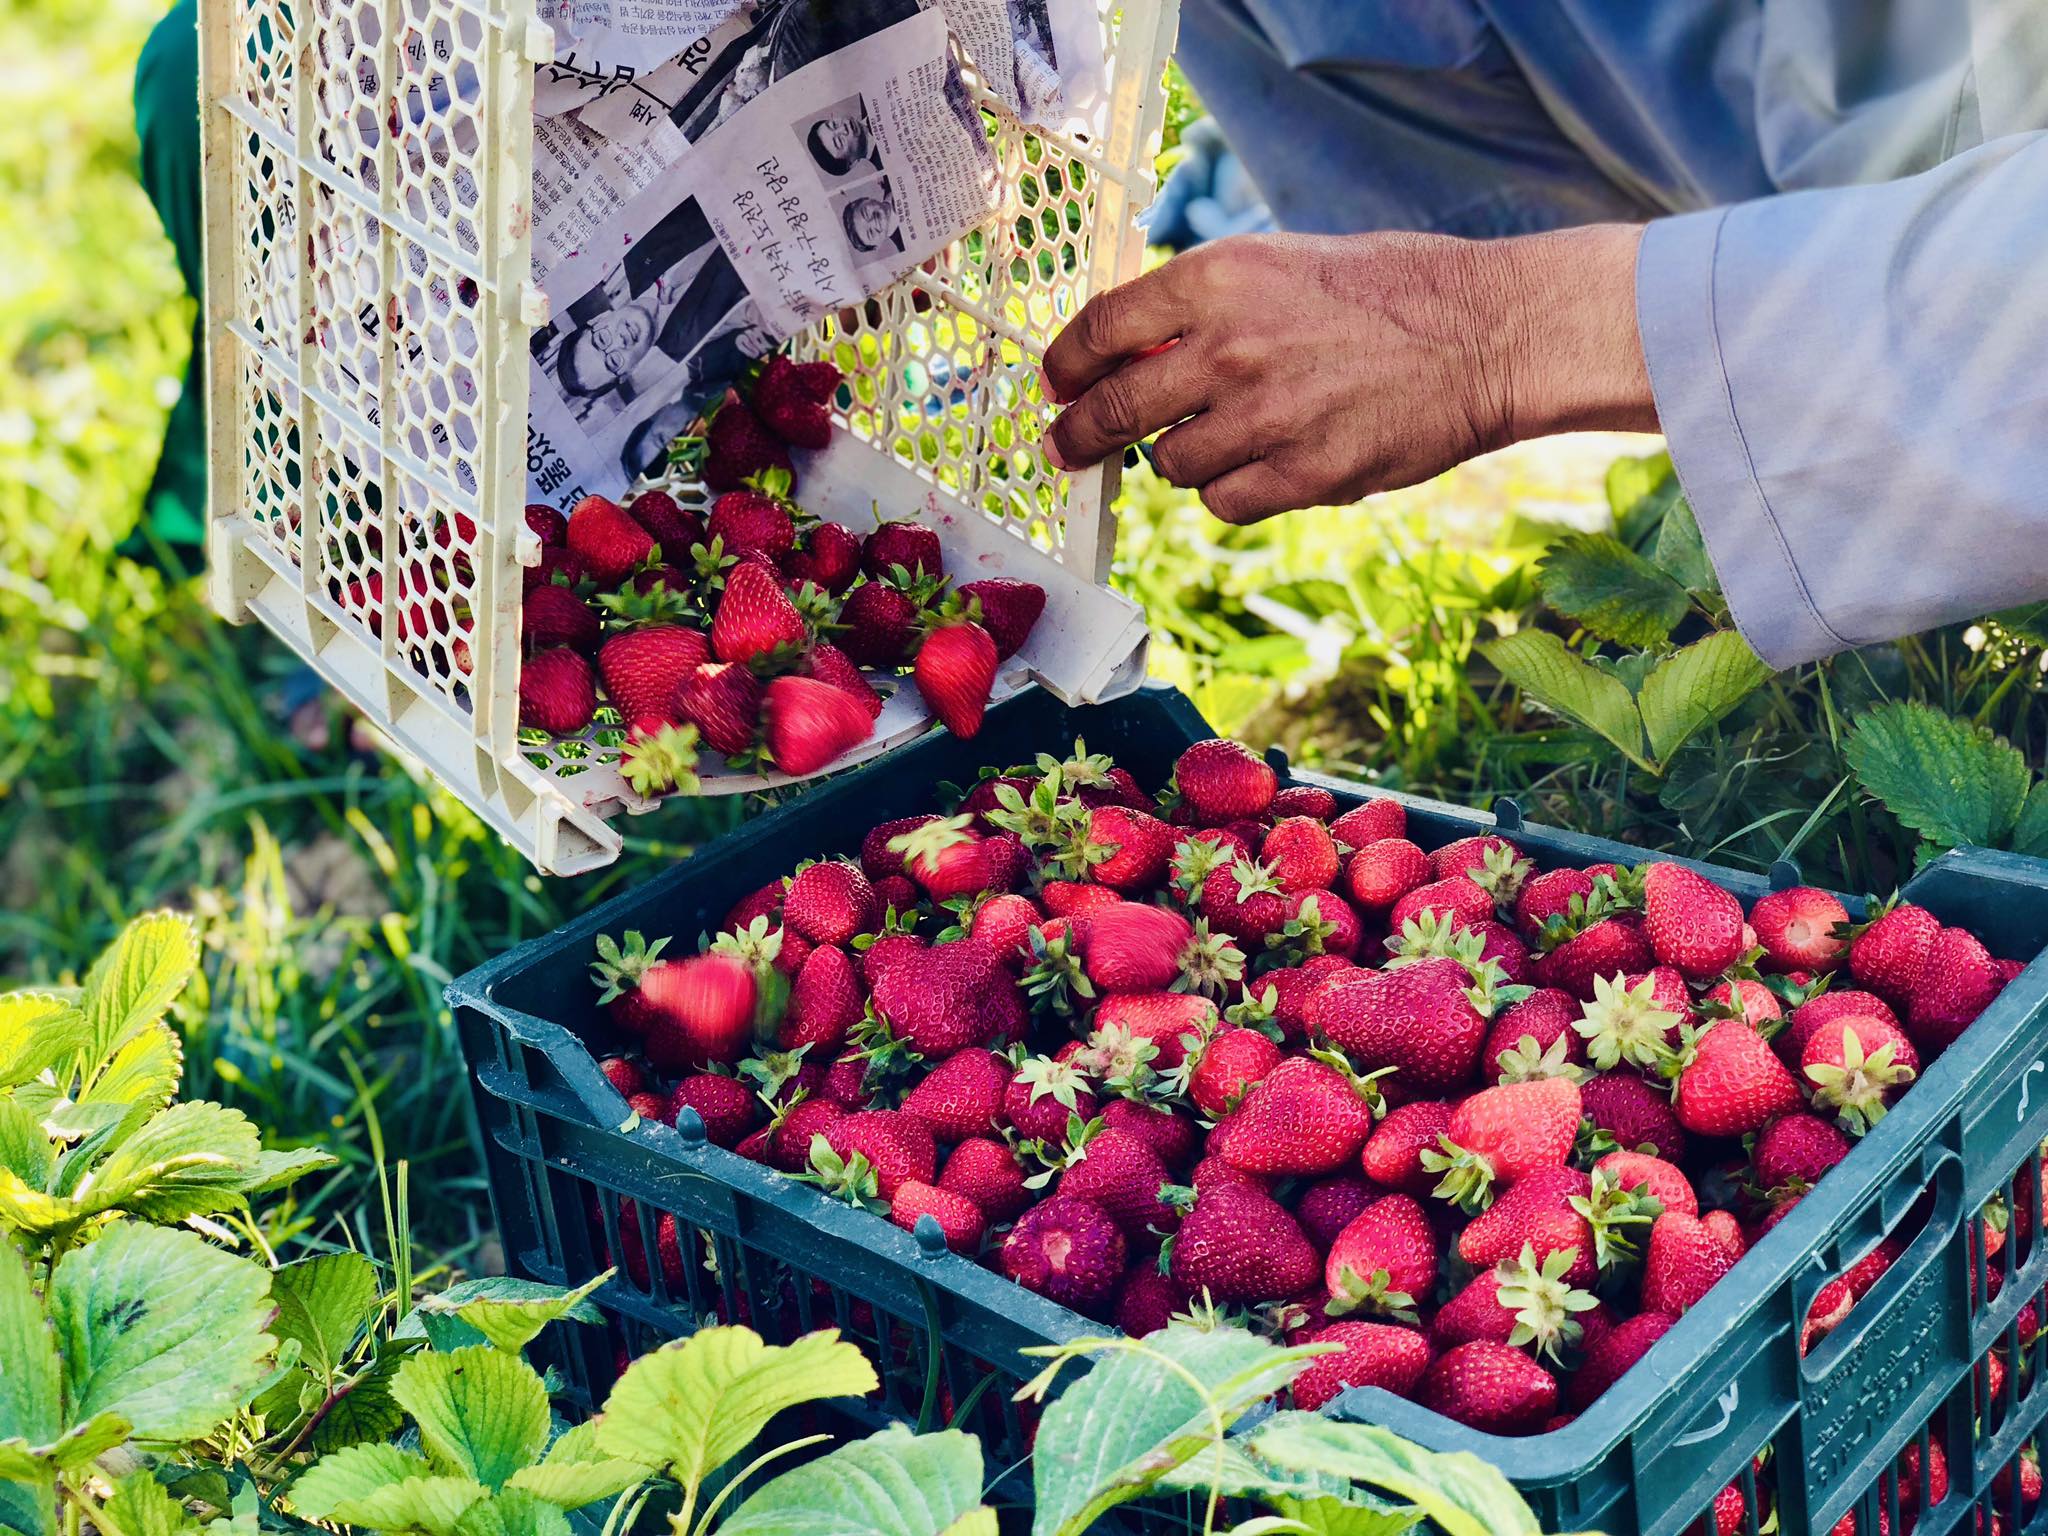 Farmers’ interest in growing strawberries increases in Balkh